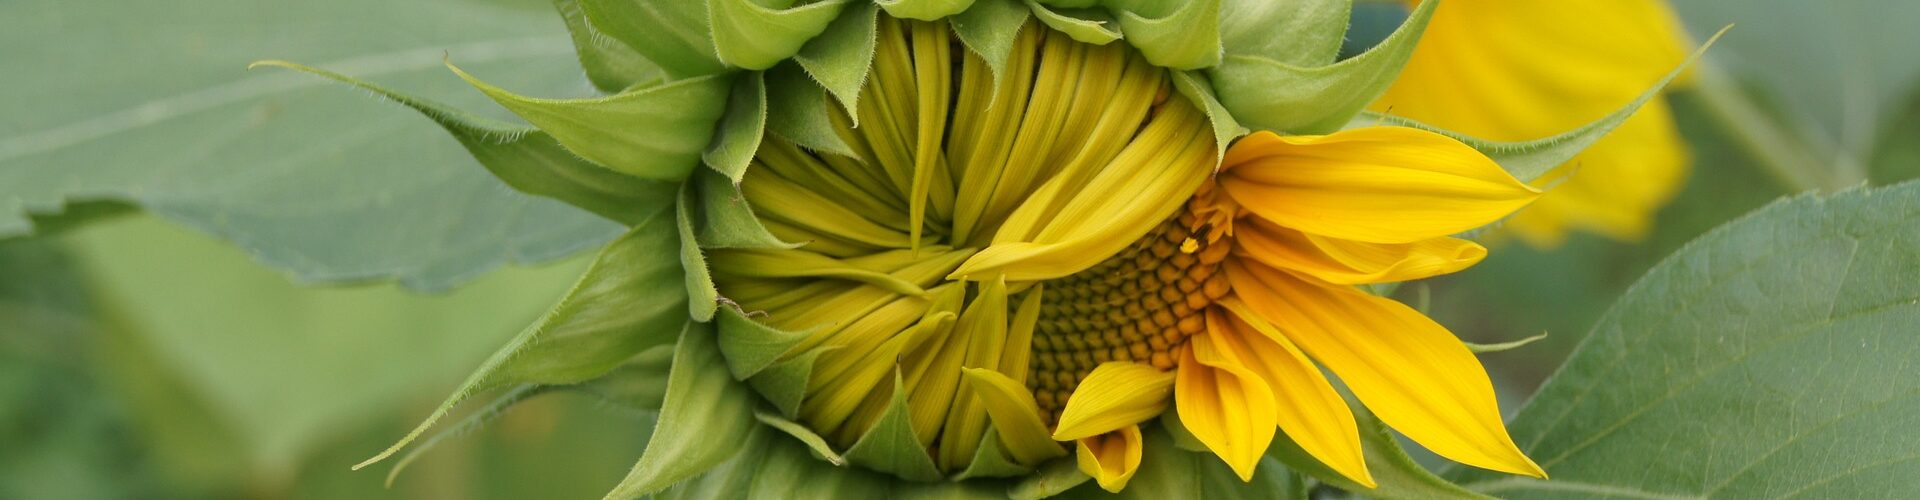 sunflower-1942825_1920-aspect-ratio-1920-500